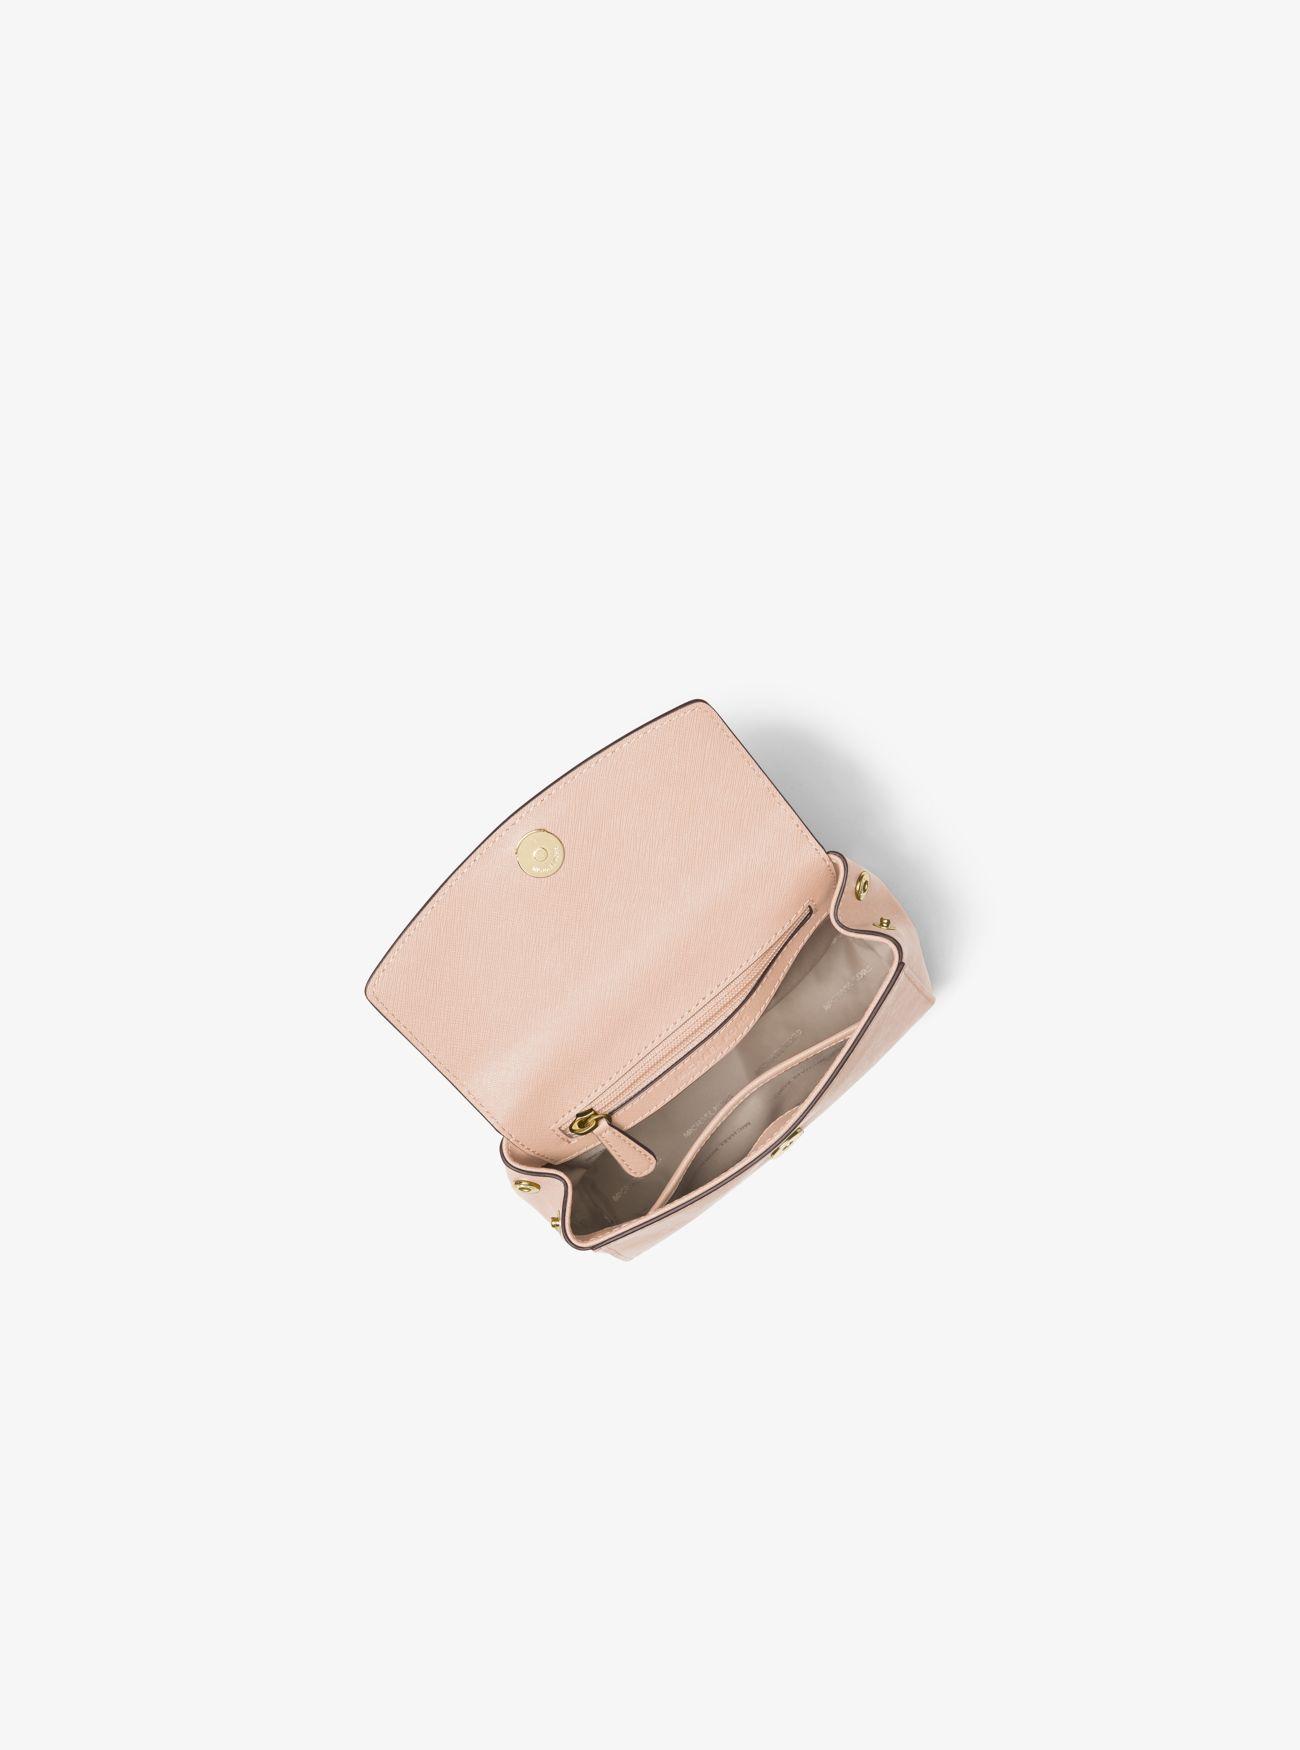 Michael Kors Ava Extra-Small Saffiano Leather Crossbody in Soft Pink by  @springflingmnlph 